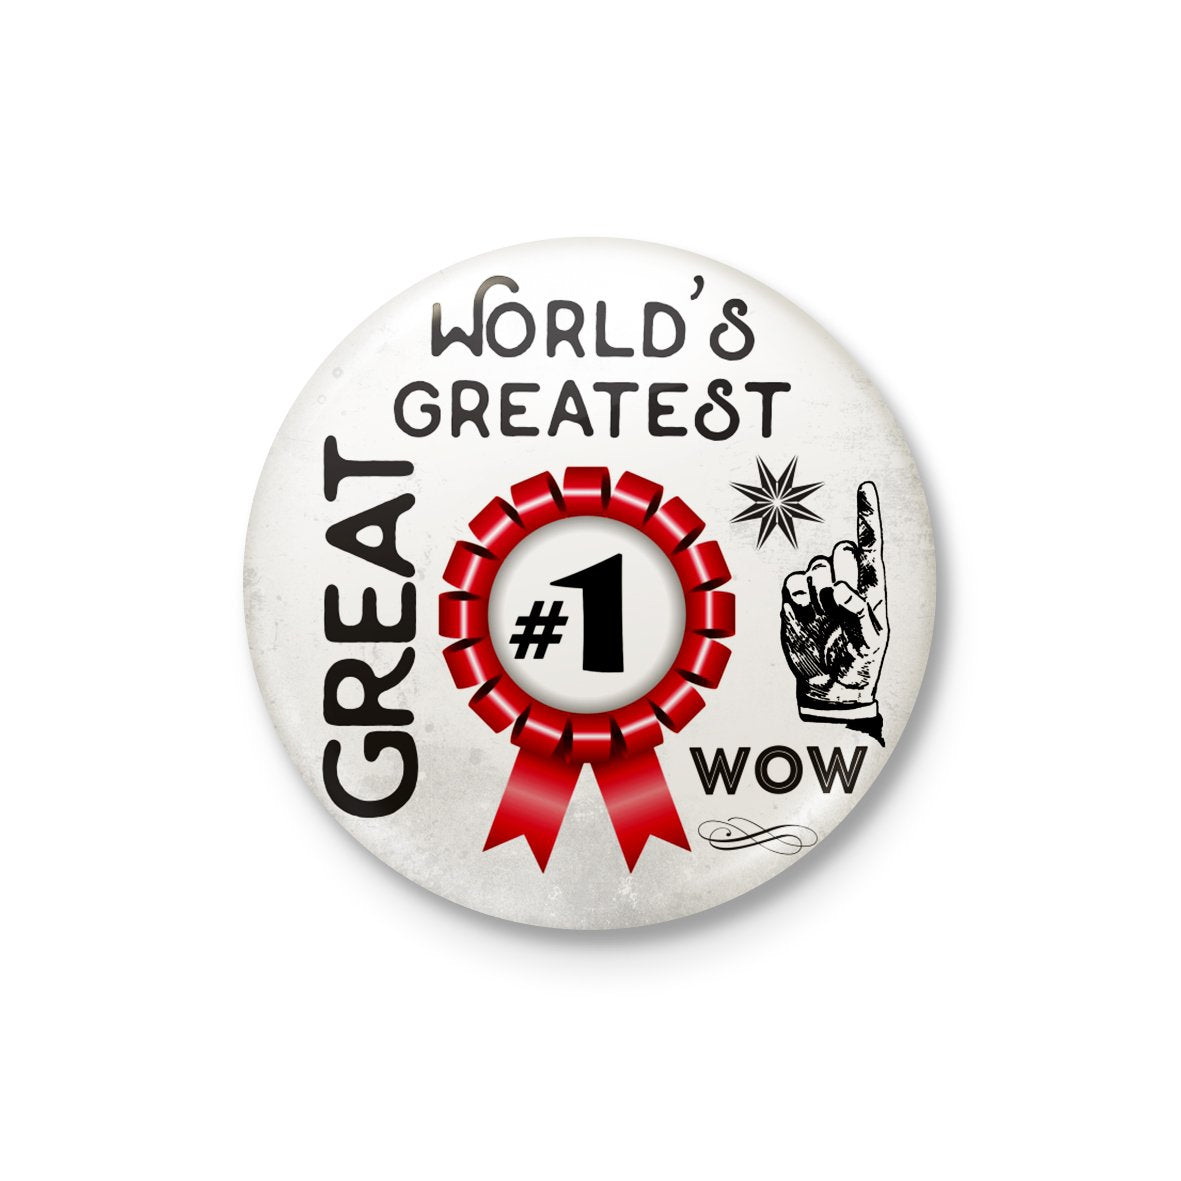 World's Greatest Badge